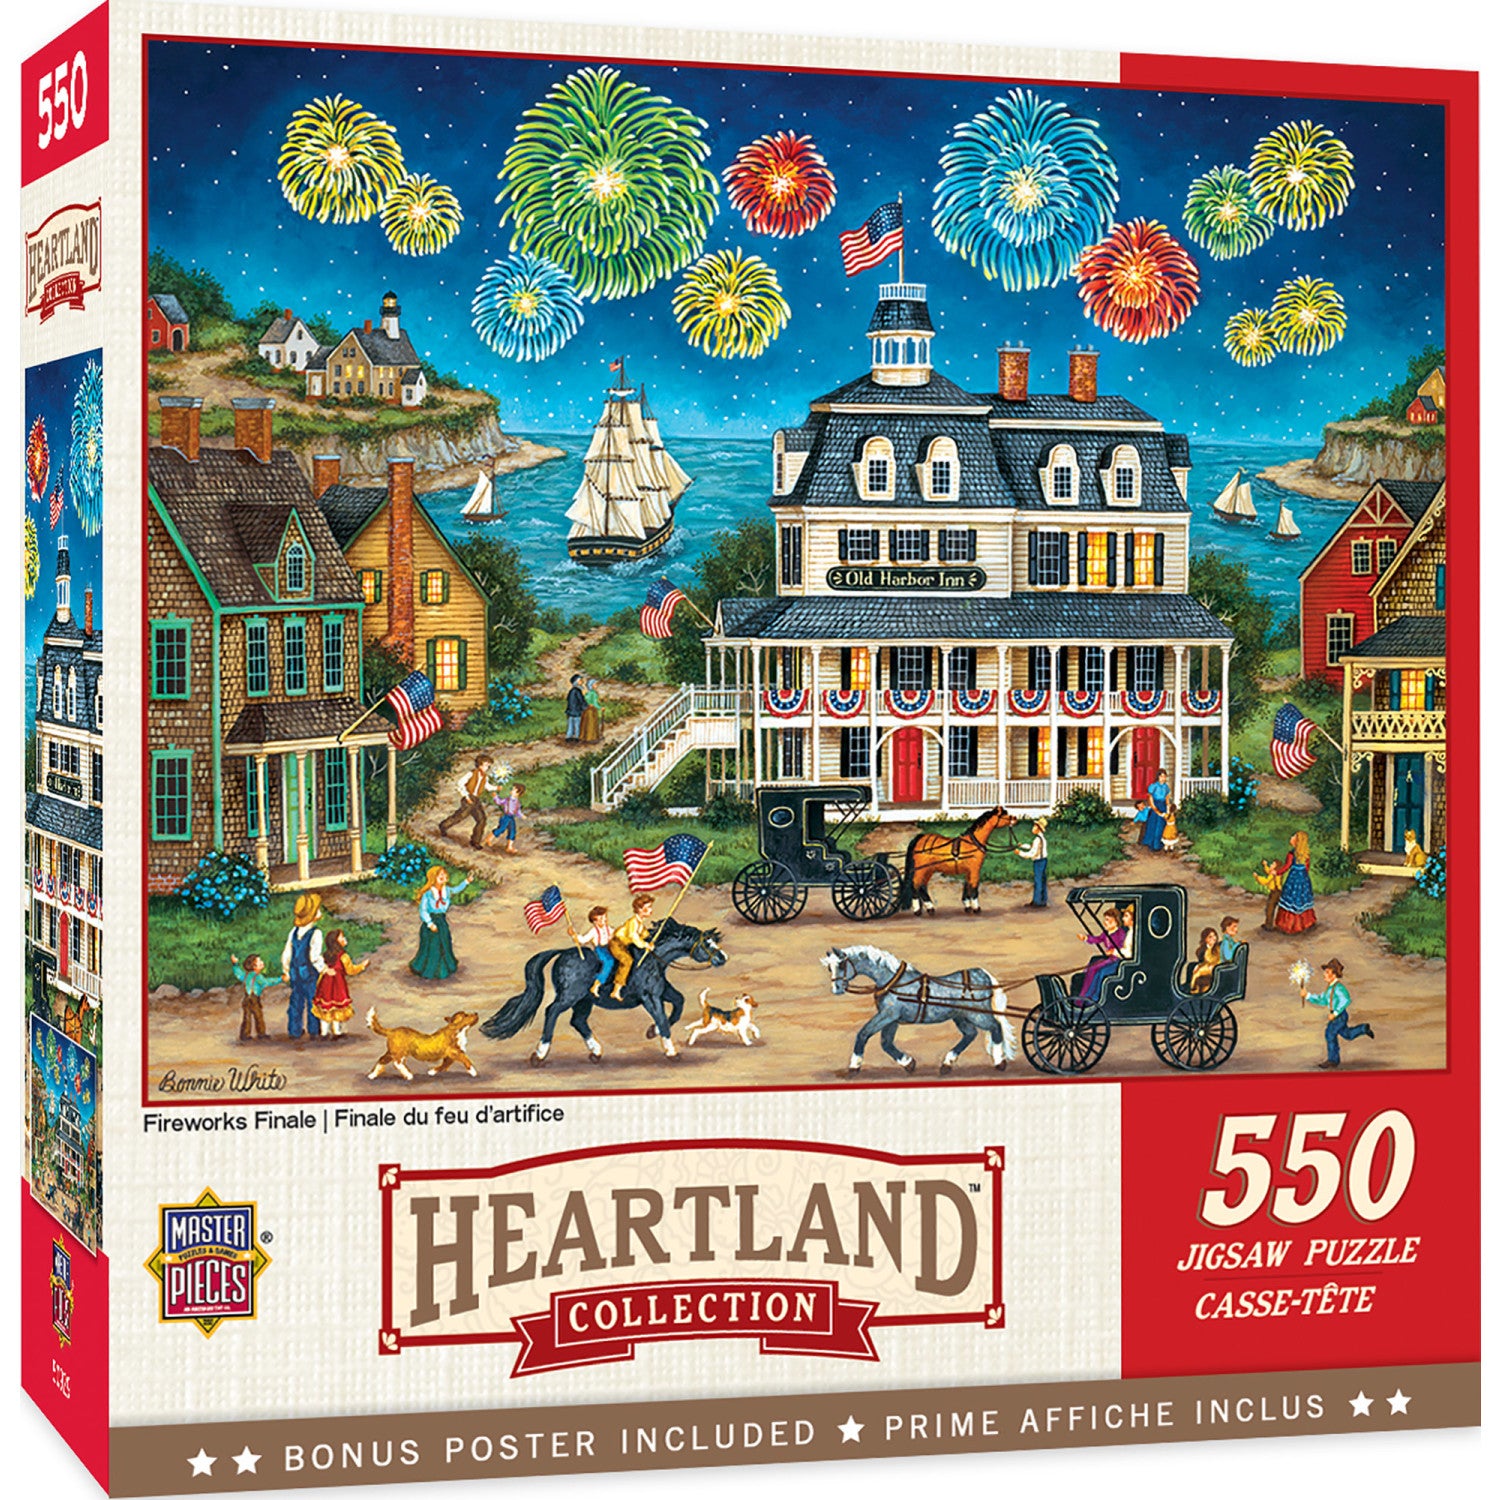 Heartland - Fireworks Finale 550 Piece Jigsaw Puzzle